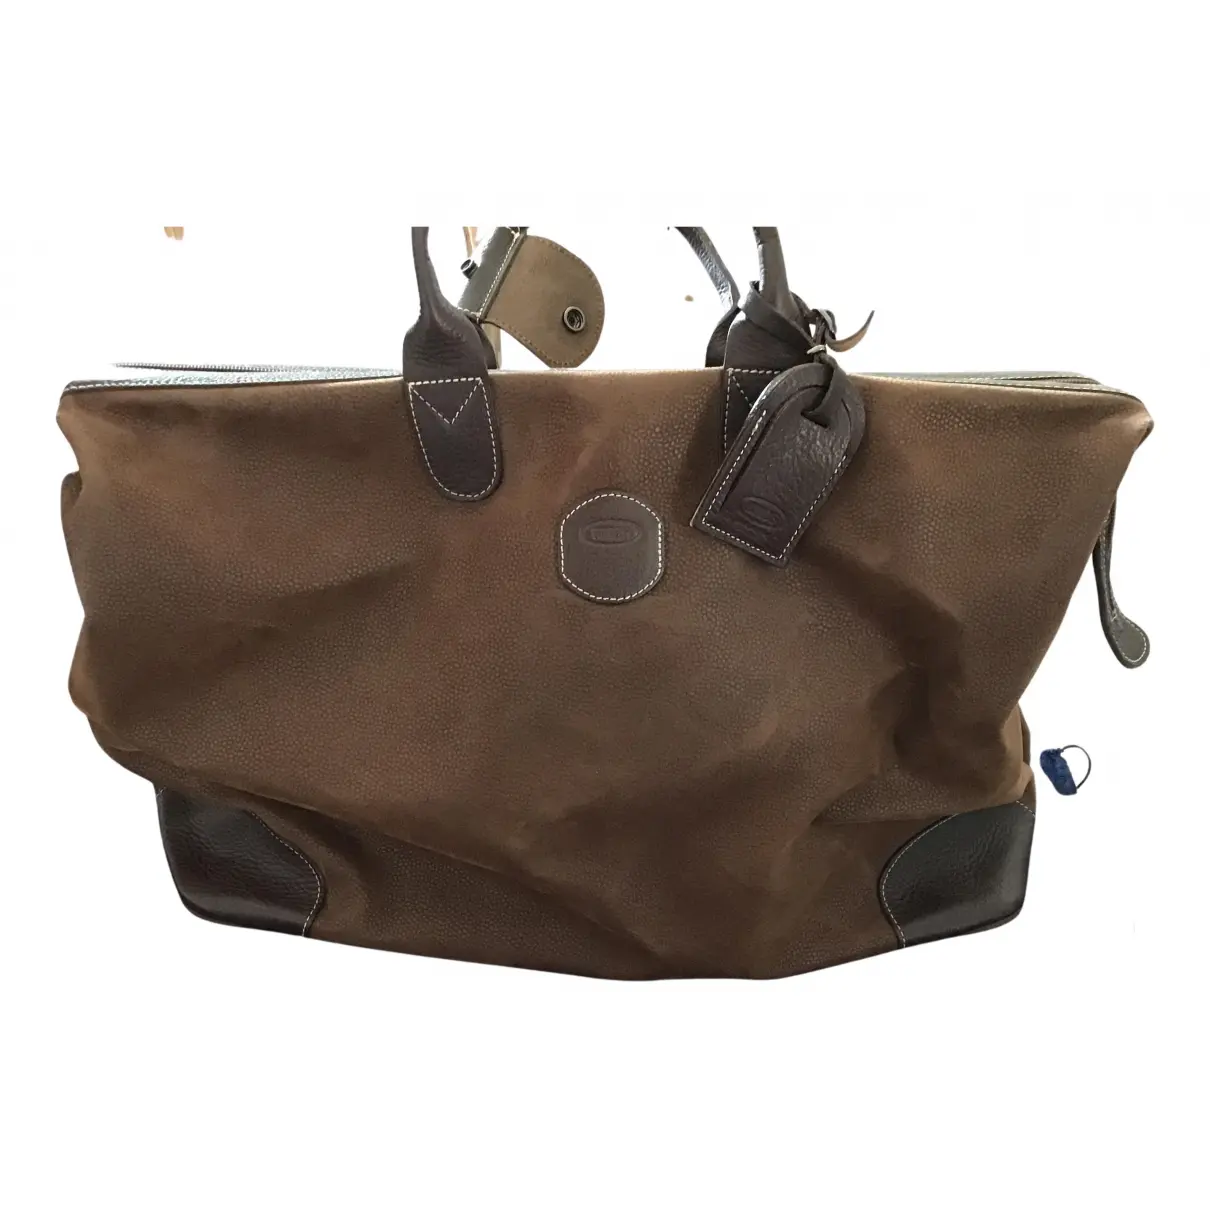 Leather travel bag Bric's - Vintage